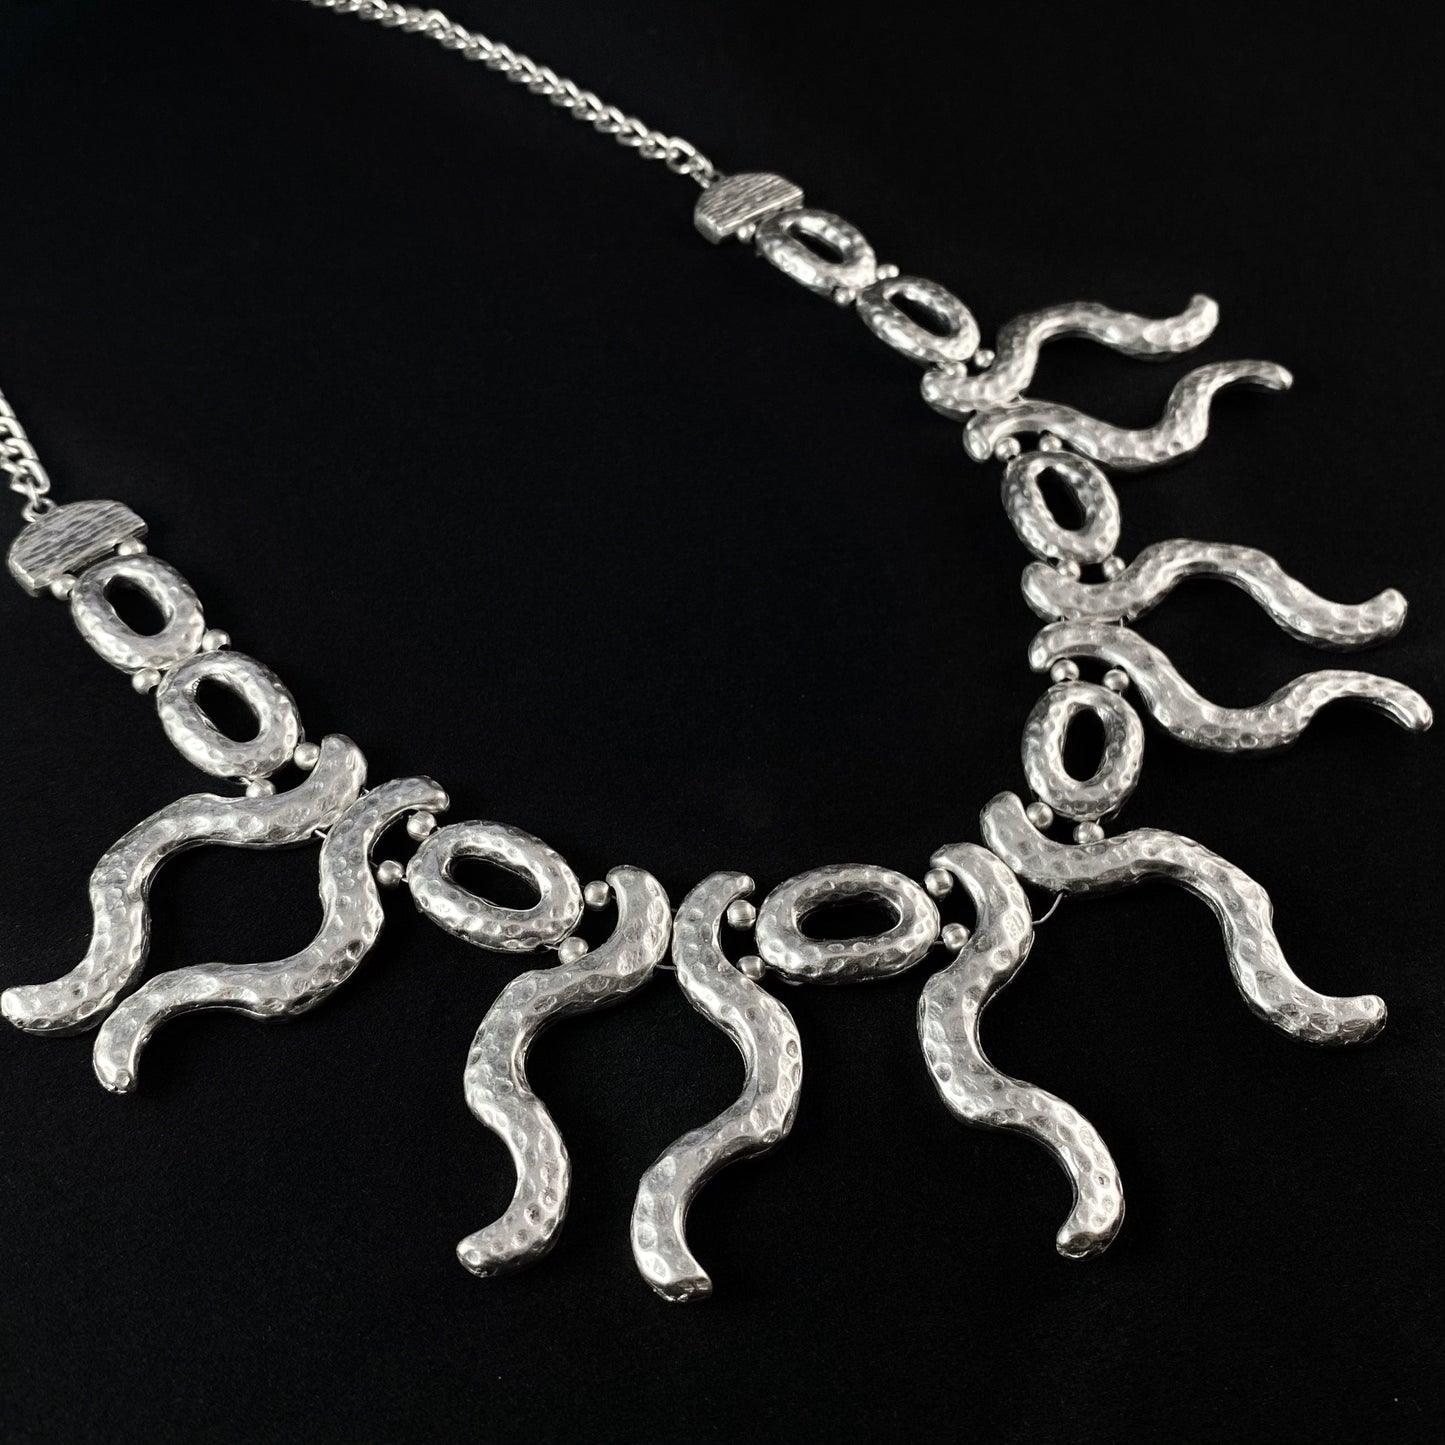 Silver Statement Necklace, Handmade, Nickel Free